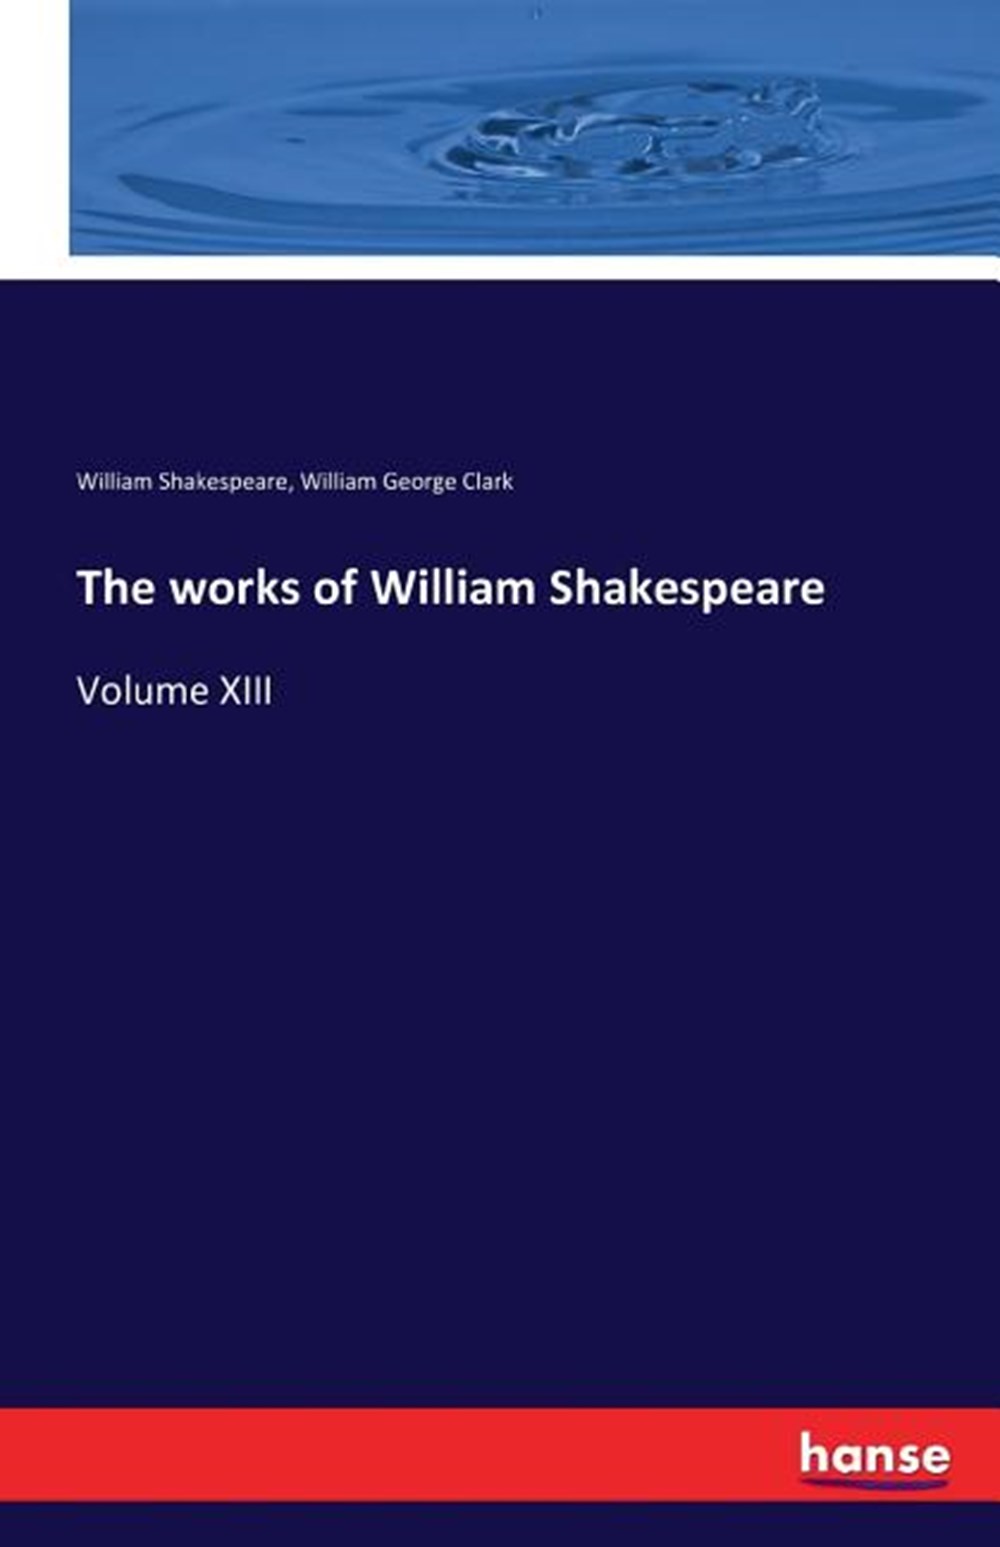 works of William Shakespeare: Volume XIII